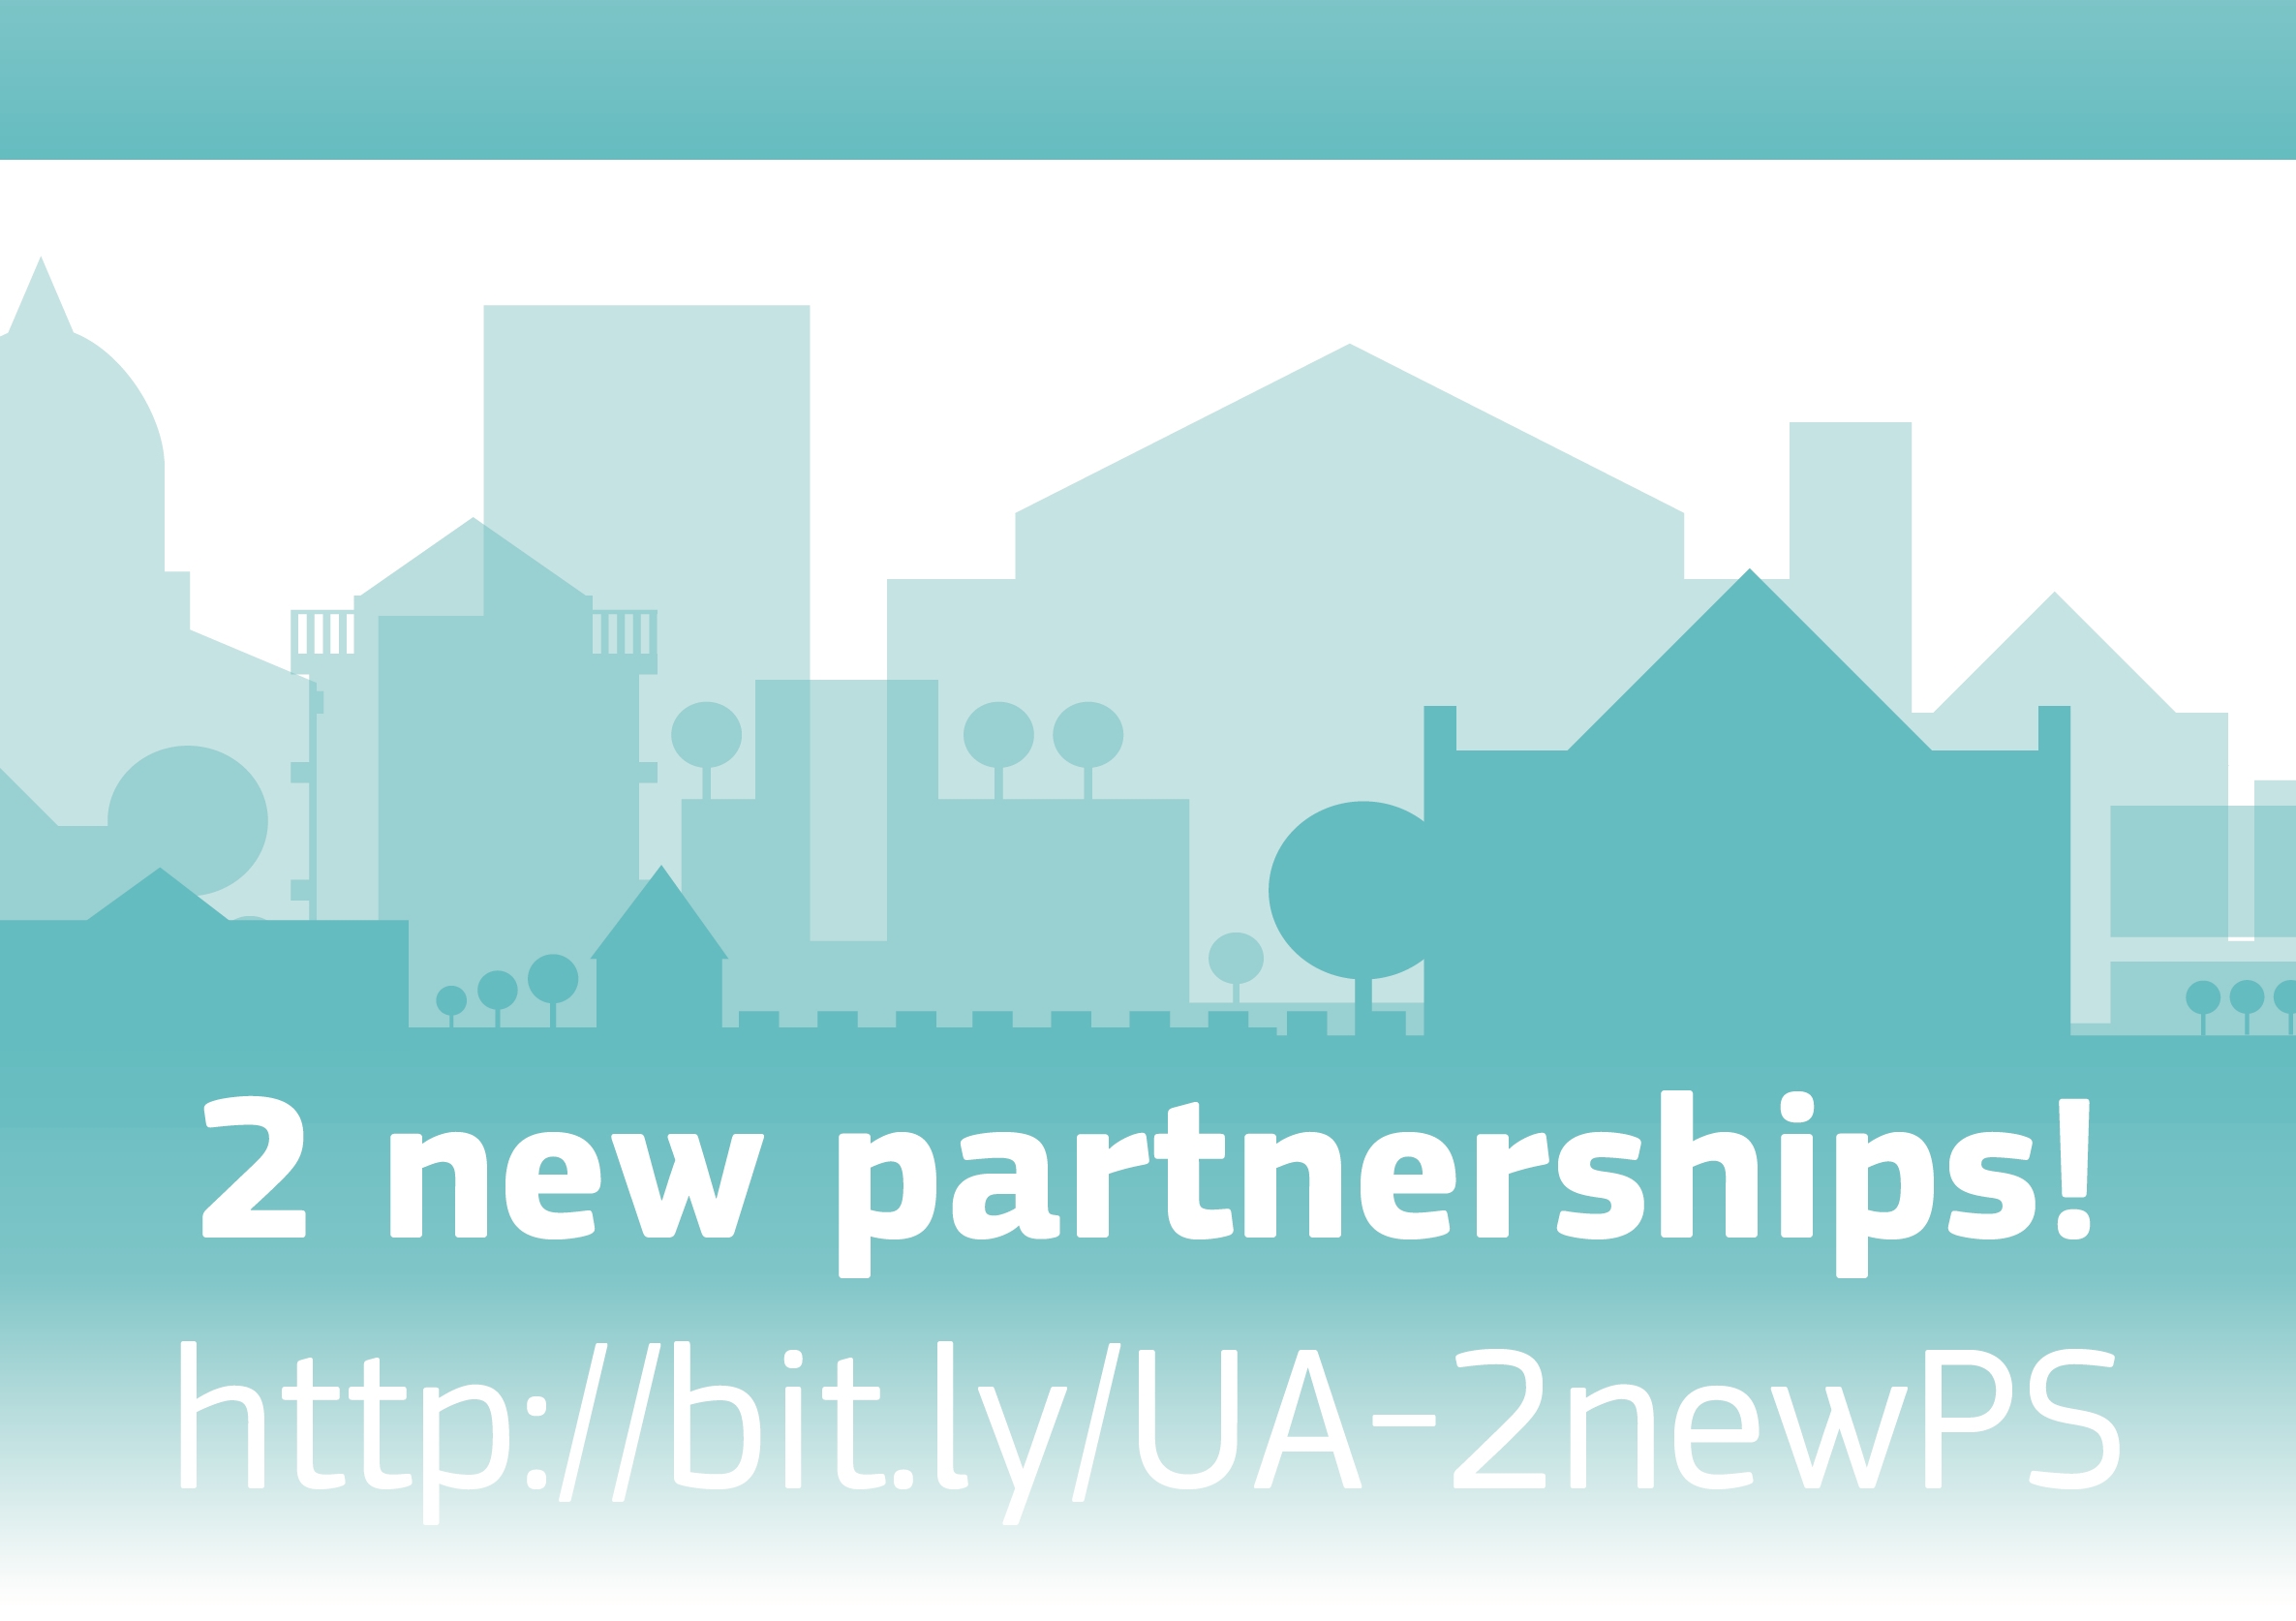 urban agenda skyline, 2 new partnerships with link